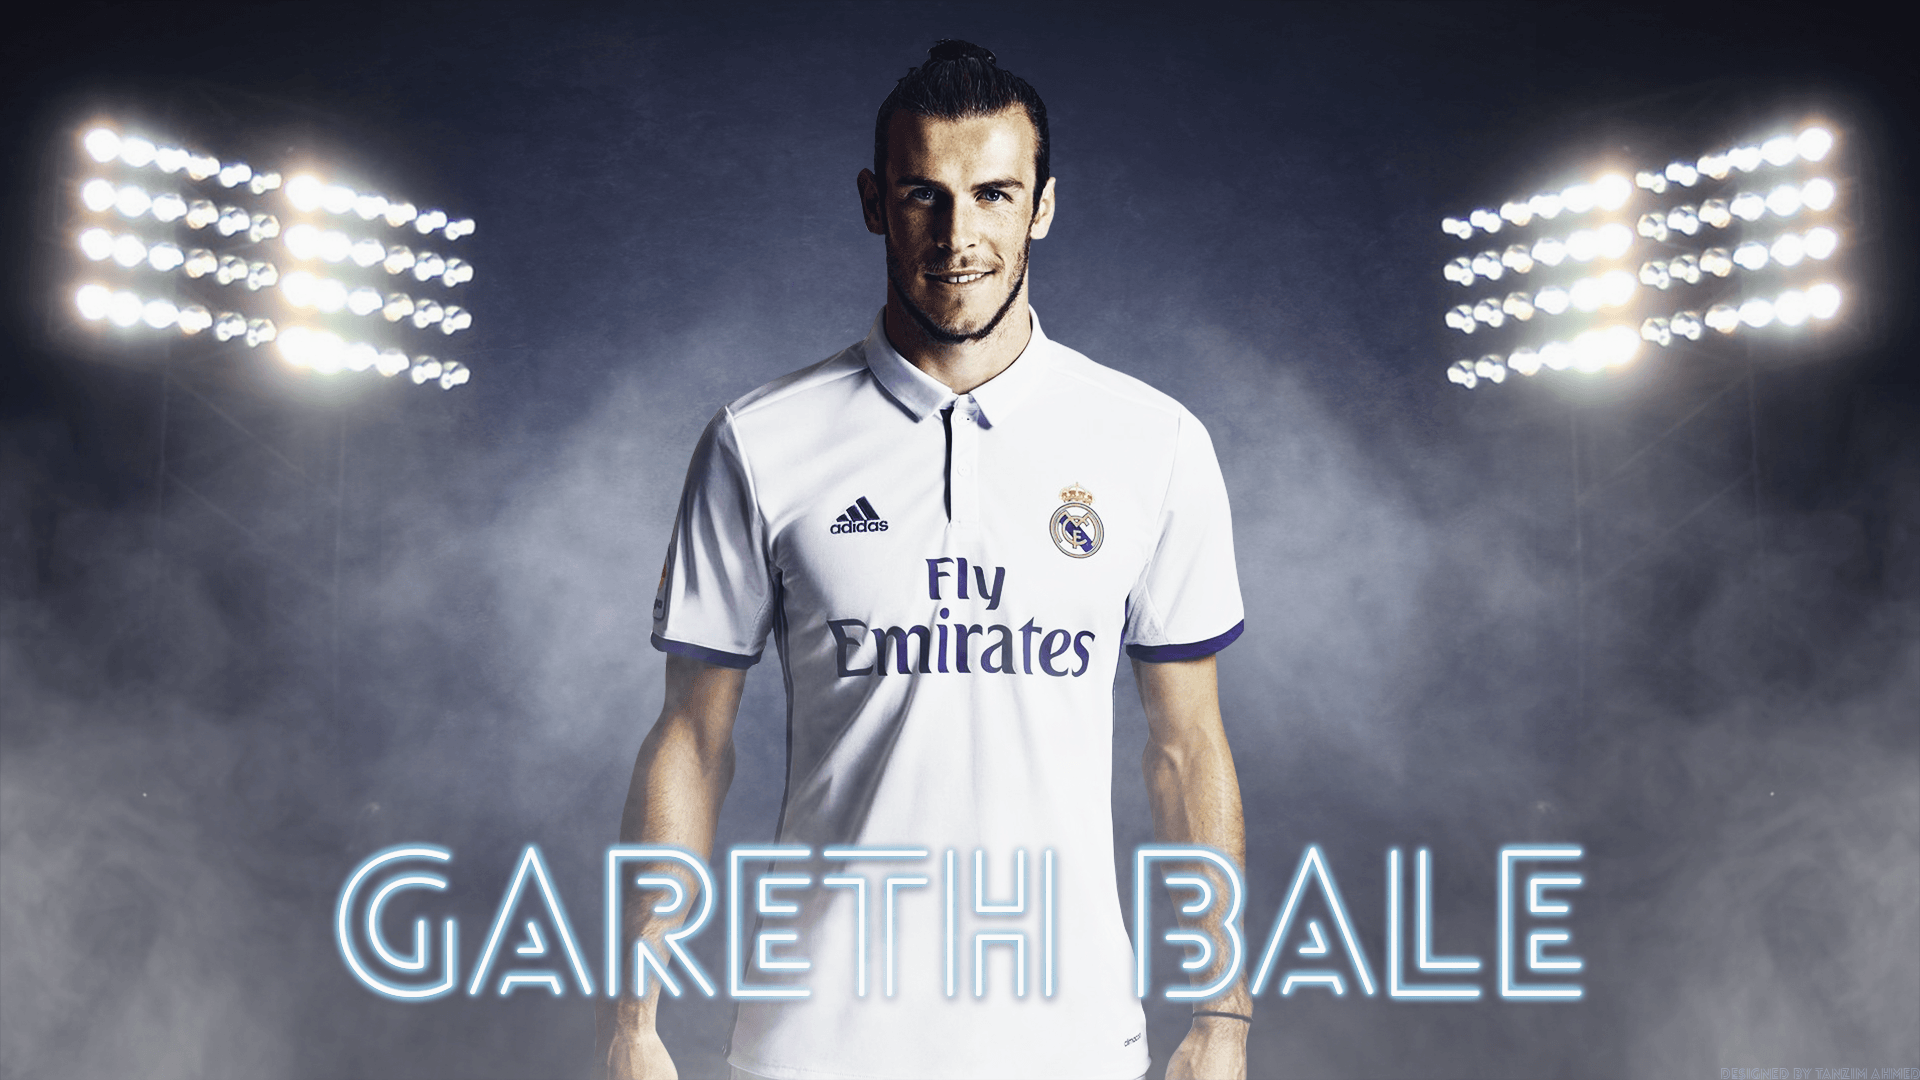 Gareth Bale Wallpaper Image Photo Picture Background. HD